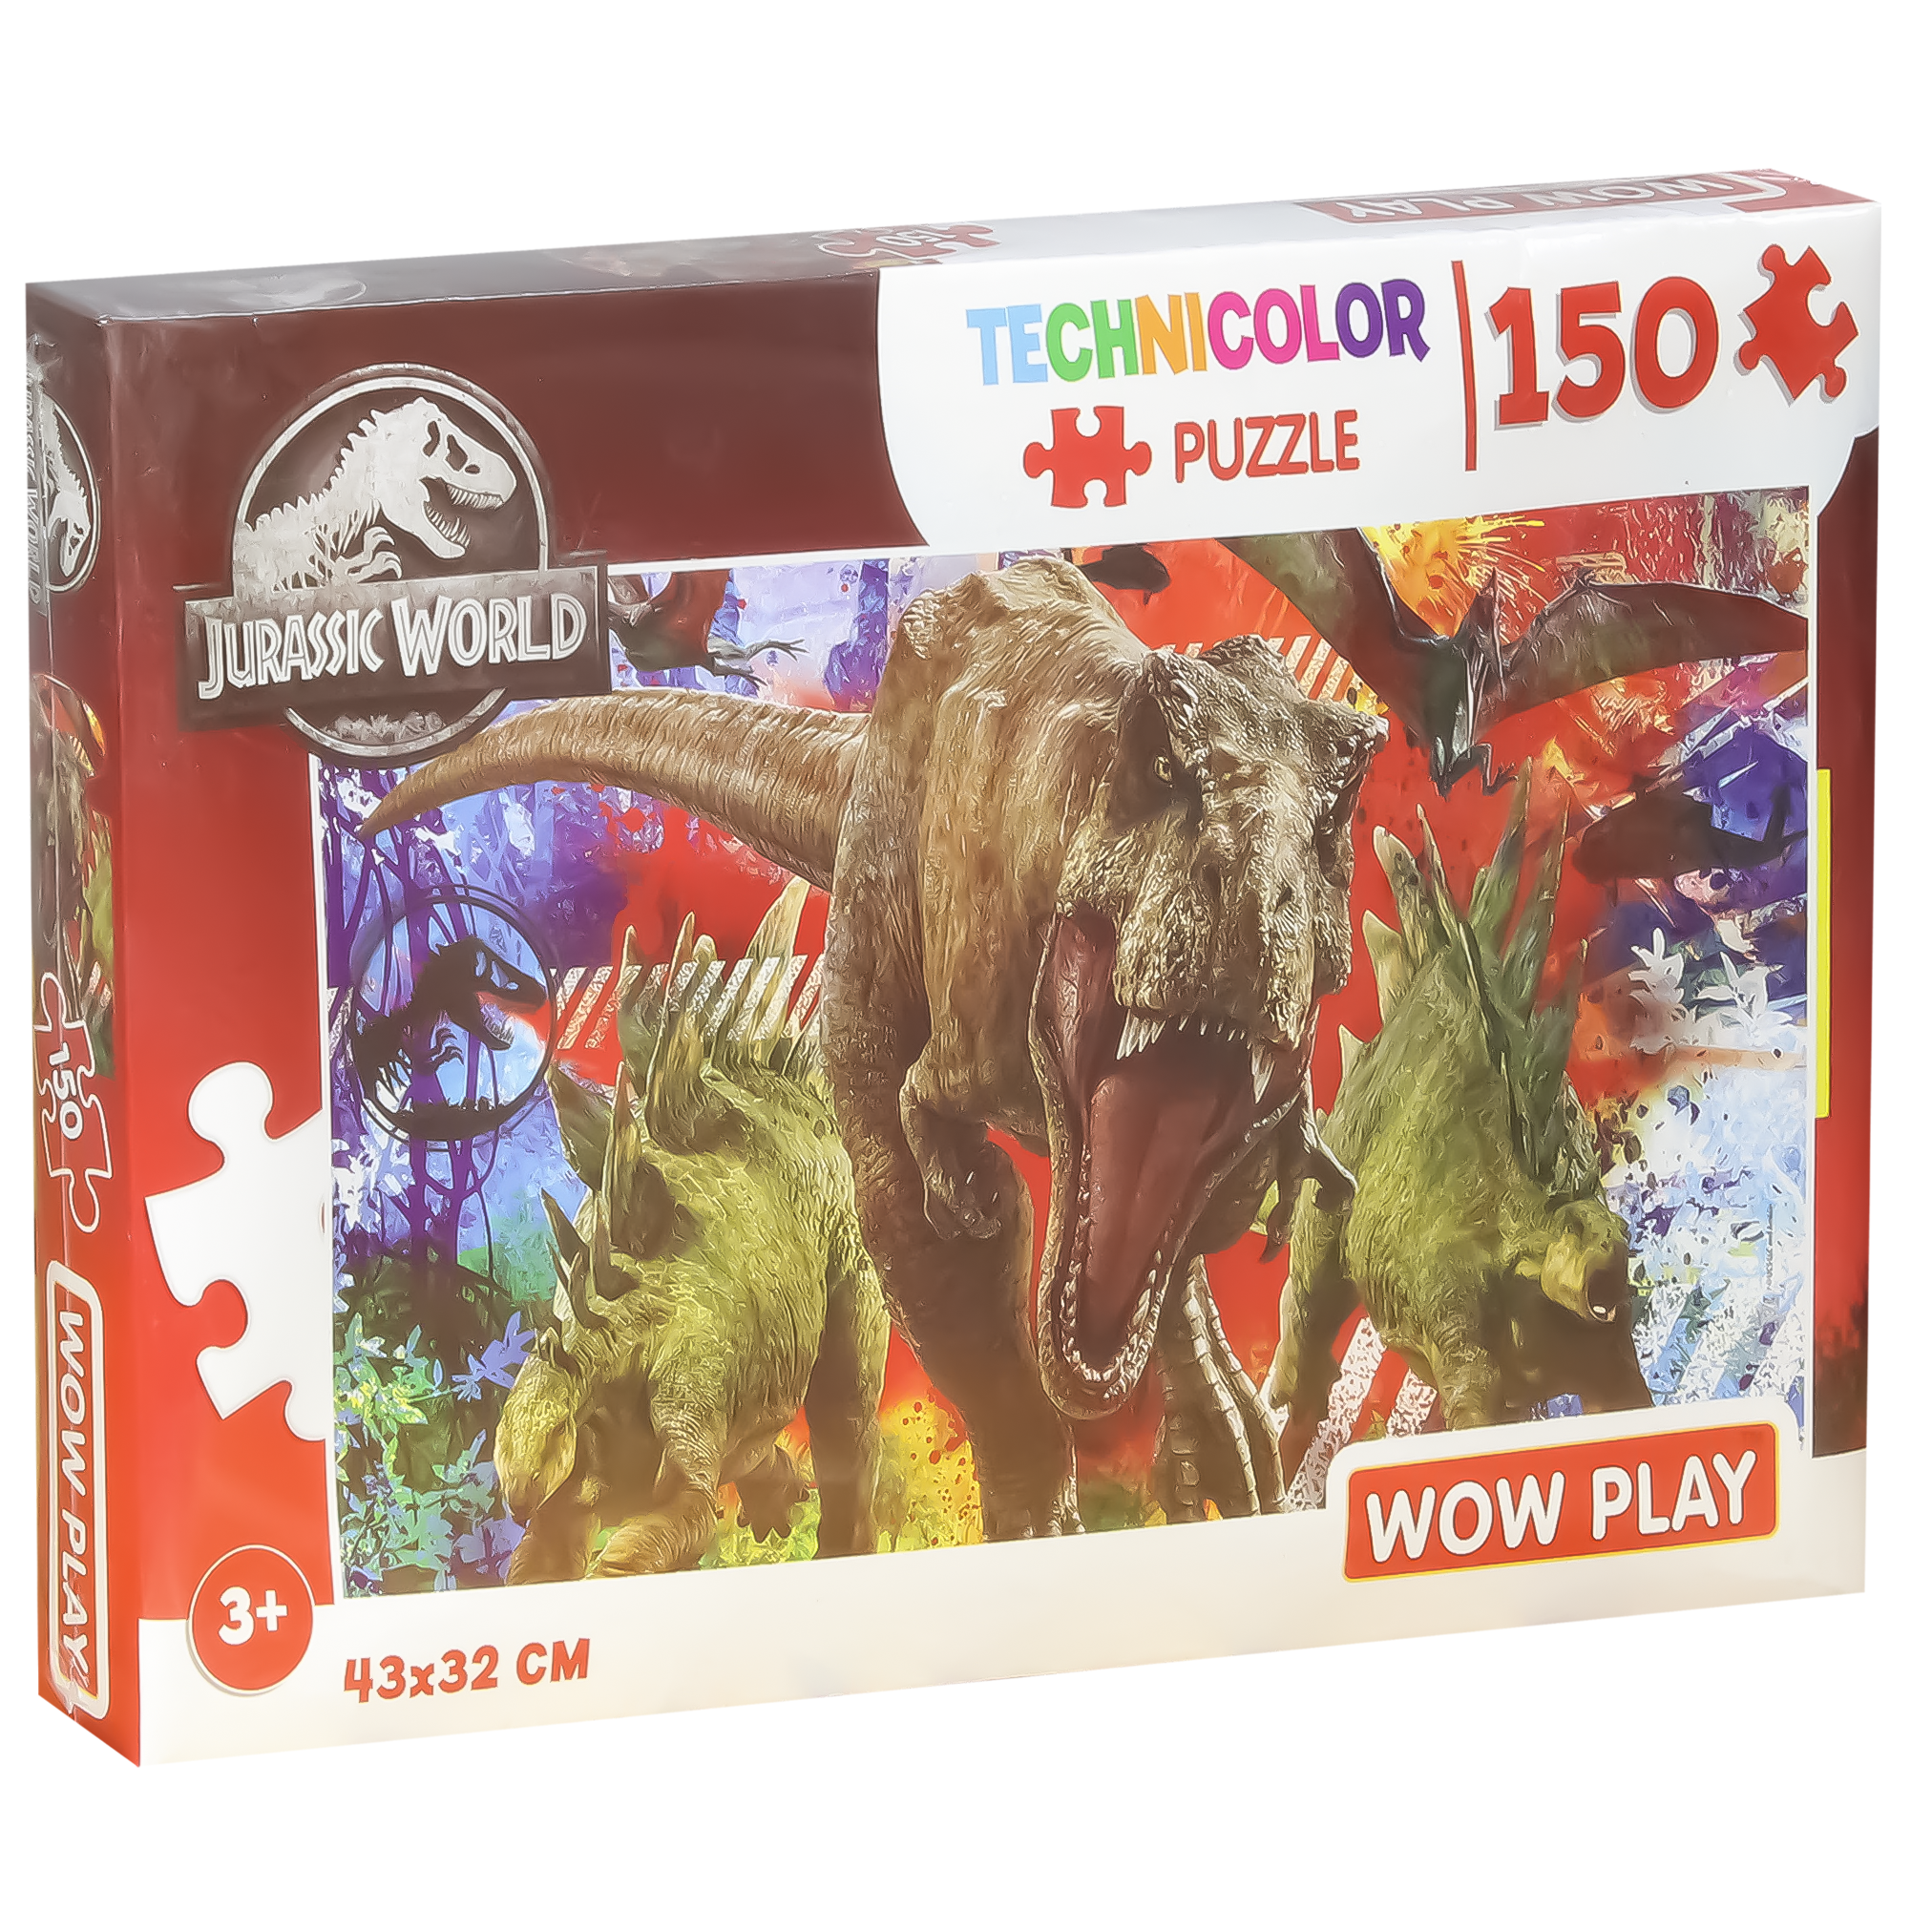 Wow Play Technicolour Puzzle 150 pieces 